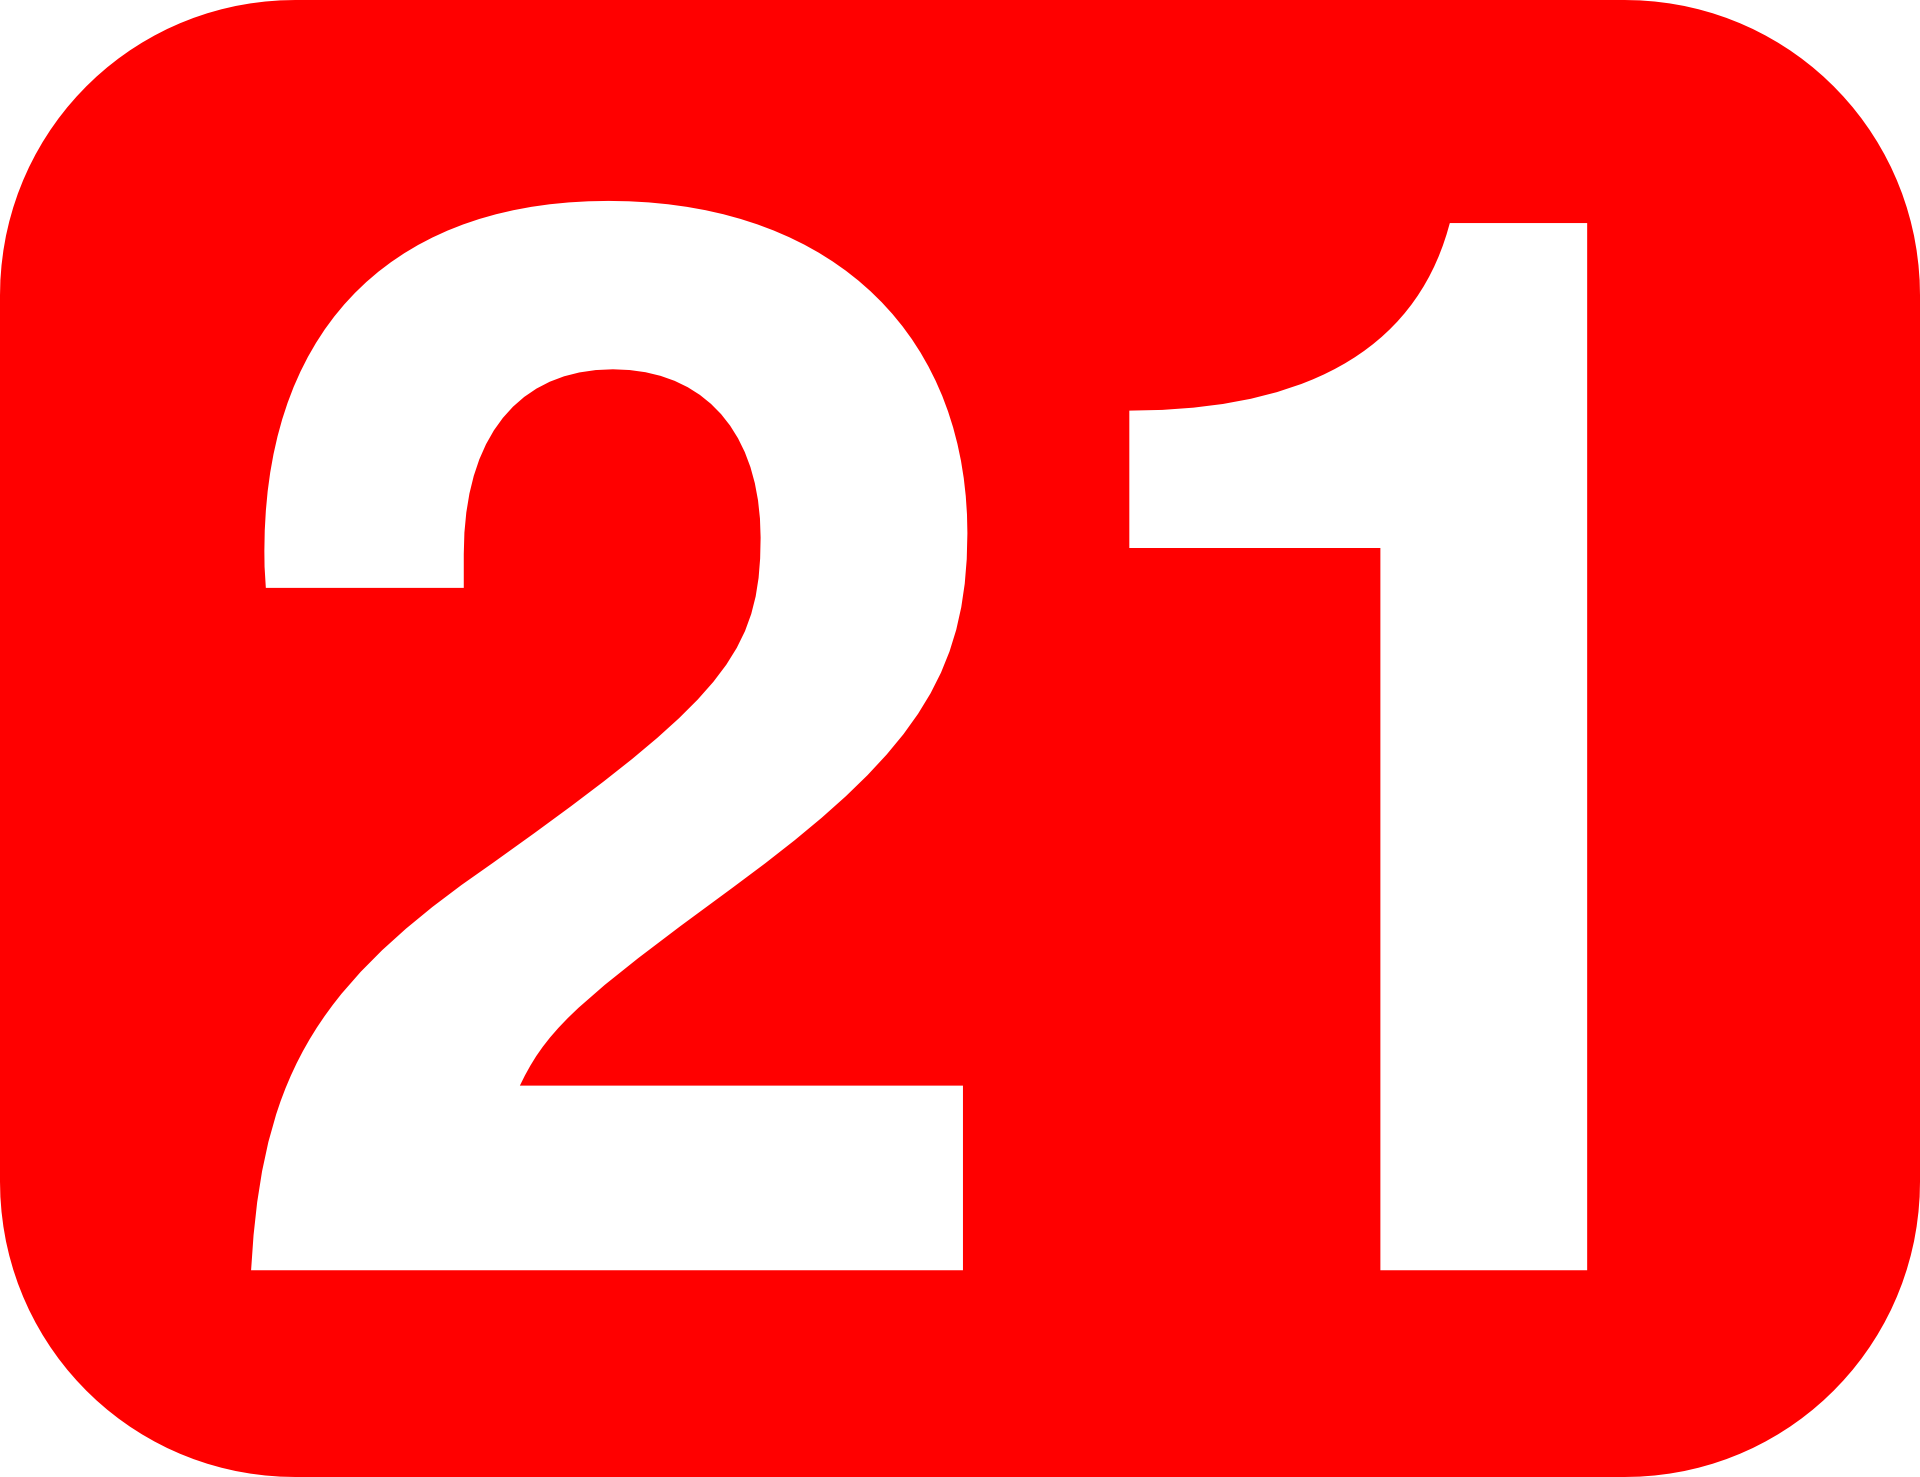 21 21 meaning. Цифра 21. Цифра 21 картинки. 21 День 21 года 21 века. Цветные цифры.